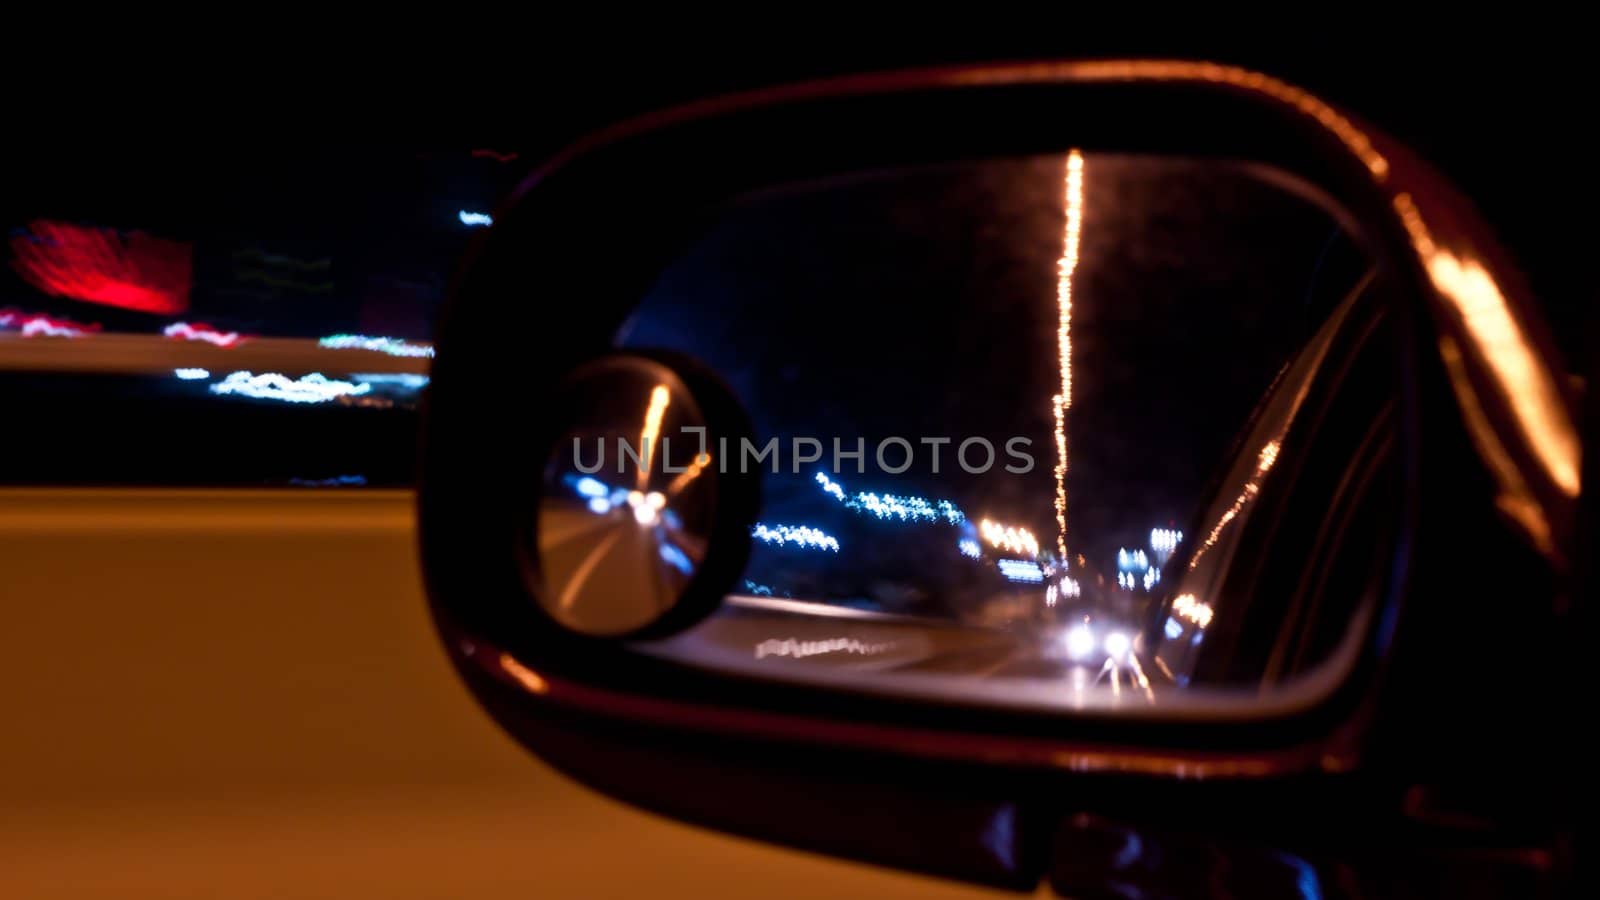 Night traffic shoot from the window of rush car motion blur steet light.